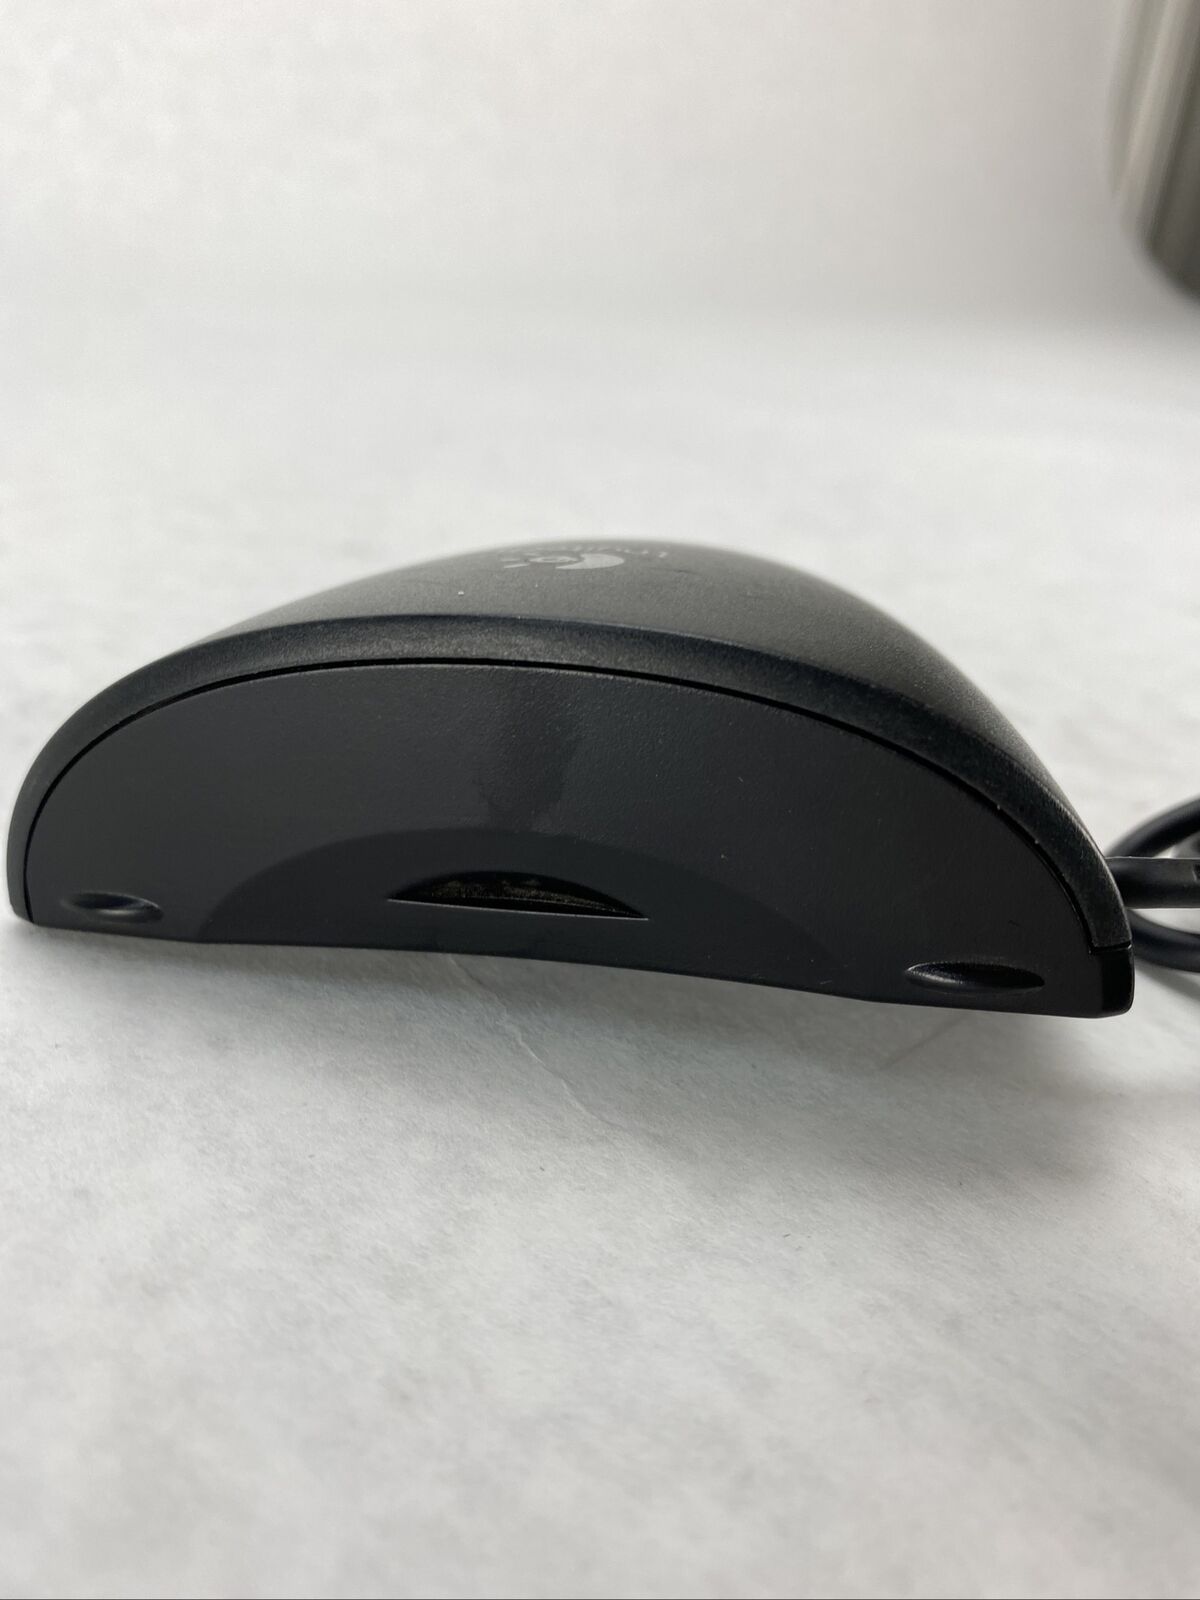 Logitech C-BN4 831192-D000 USB Cordless Mouse Receiver ONLY